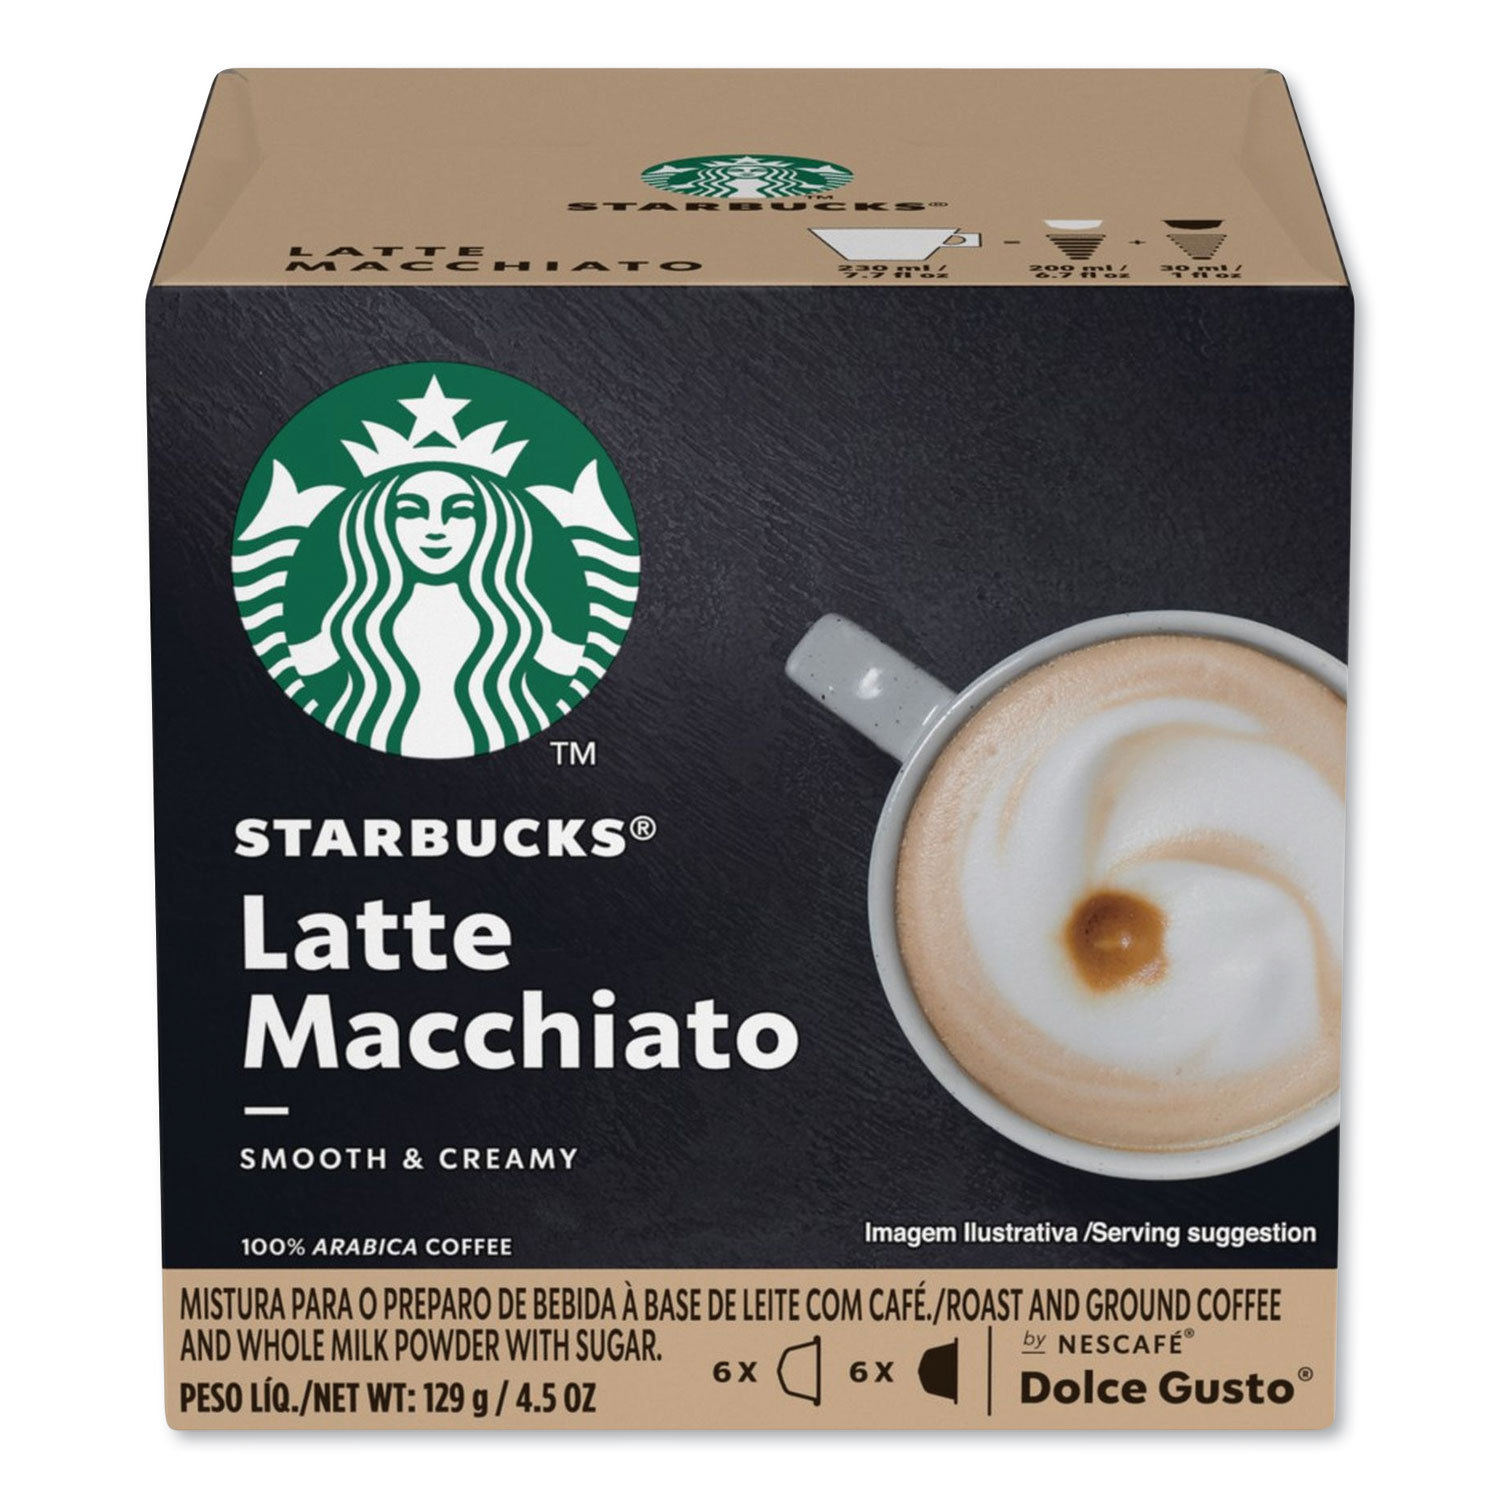  NESCAFÉ Dolce Gusto 94142BX Starbucks Coffee Capsules, Latte Macchiato, 12/Box (NES94142BX) 